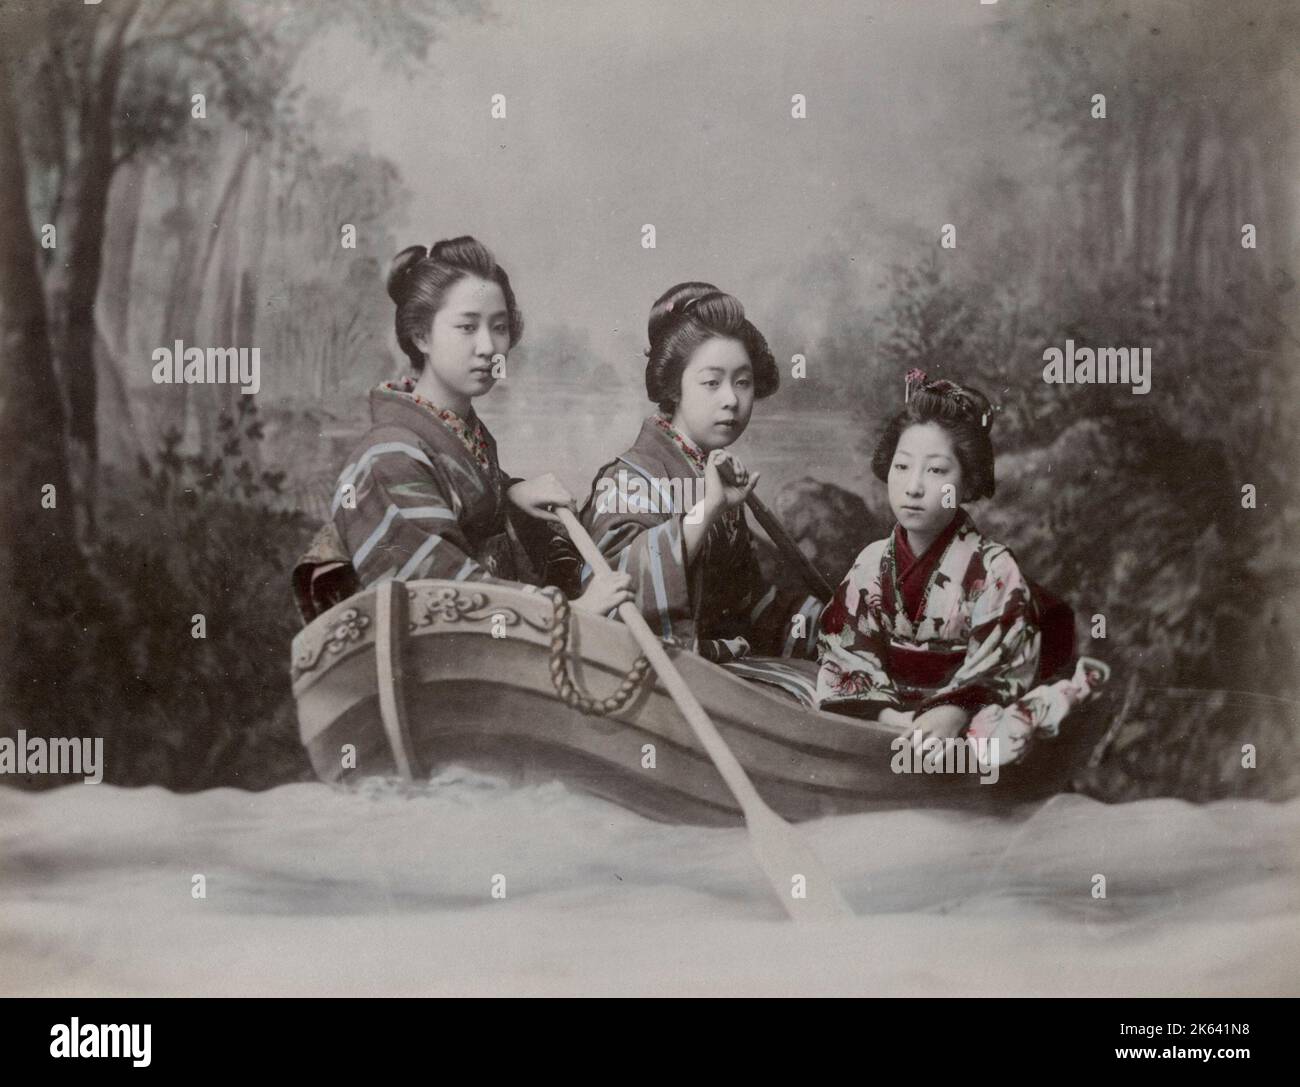 Junge Frauen in einem Ruderboot, Studioszene tableau. Vintage 19. Jahrhundert Foto. Stockfoto